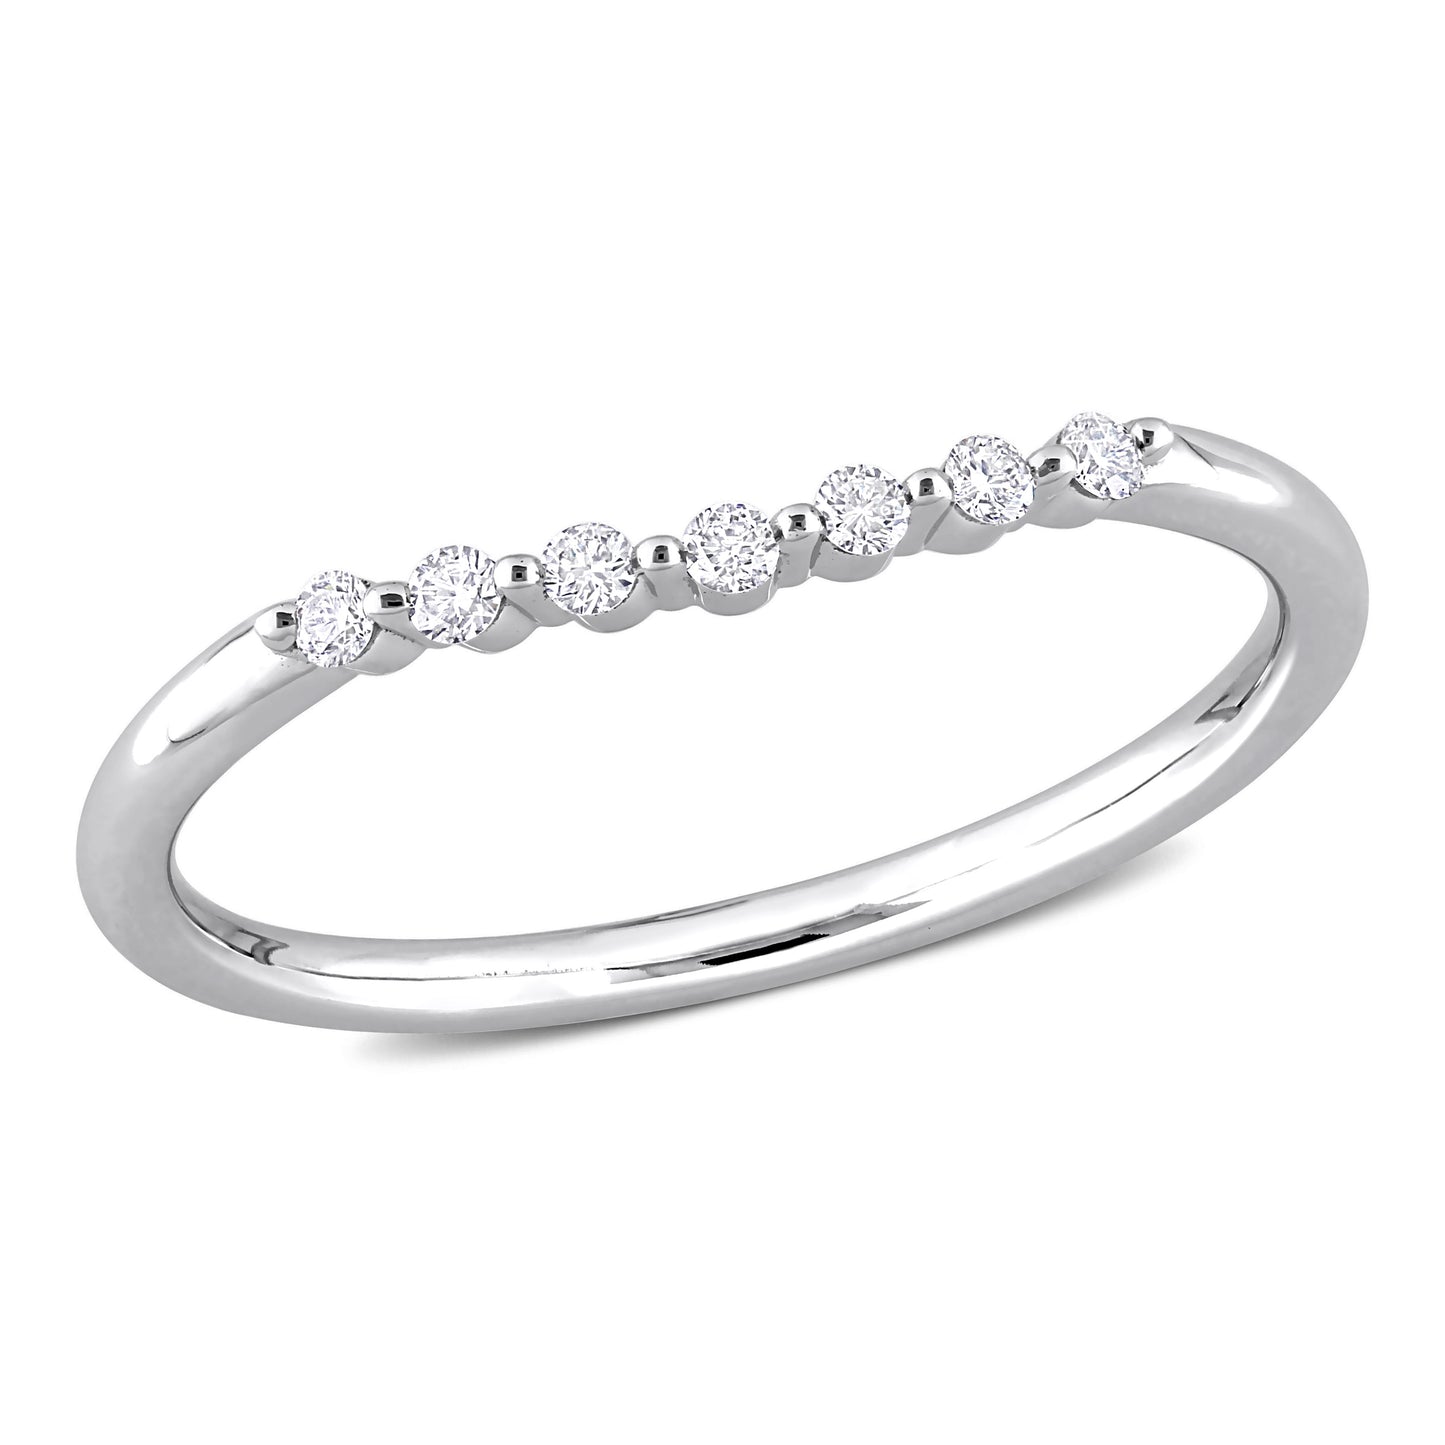 7-Stone Diamond Ring in 14k White Gold